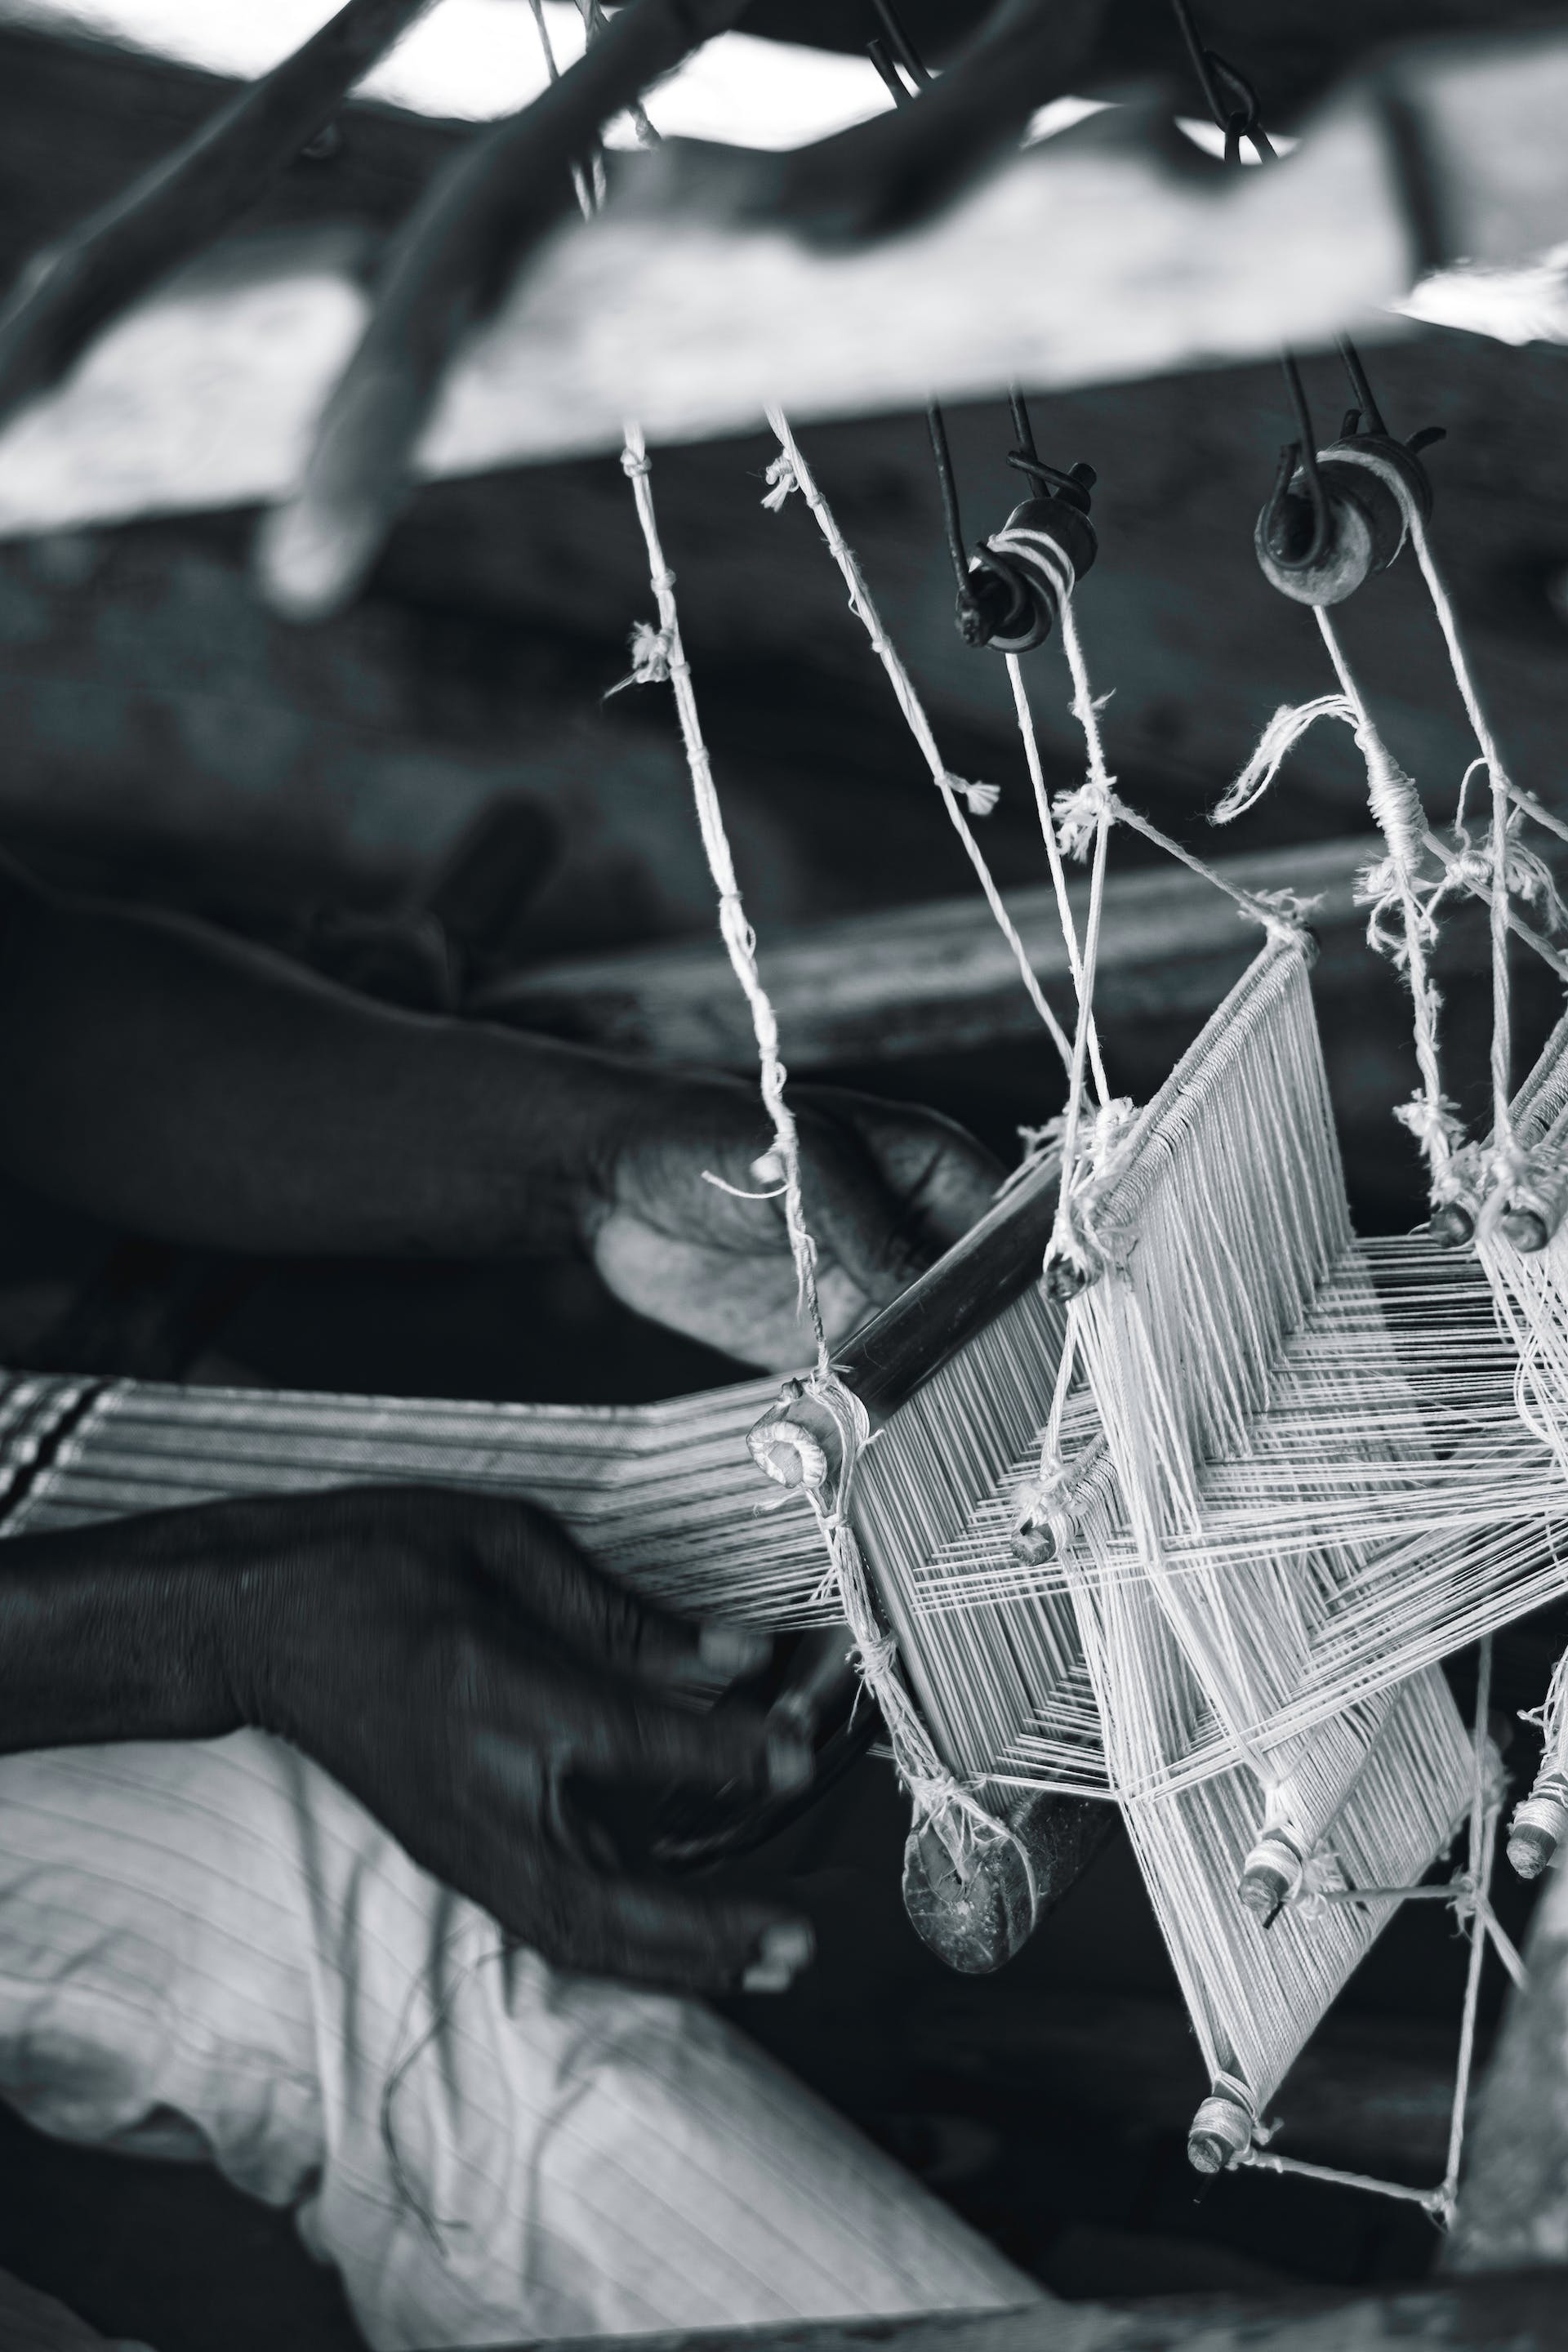 Traditional-crafts-and-handmade-skills